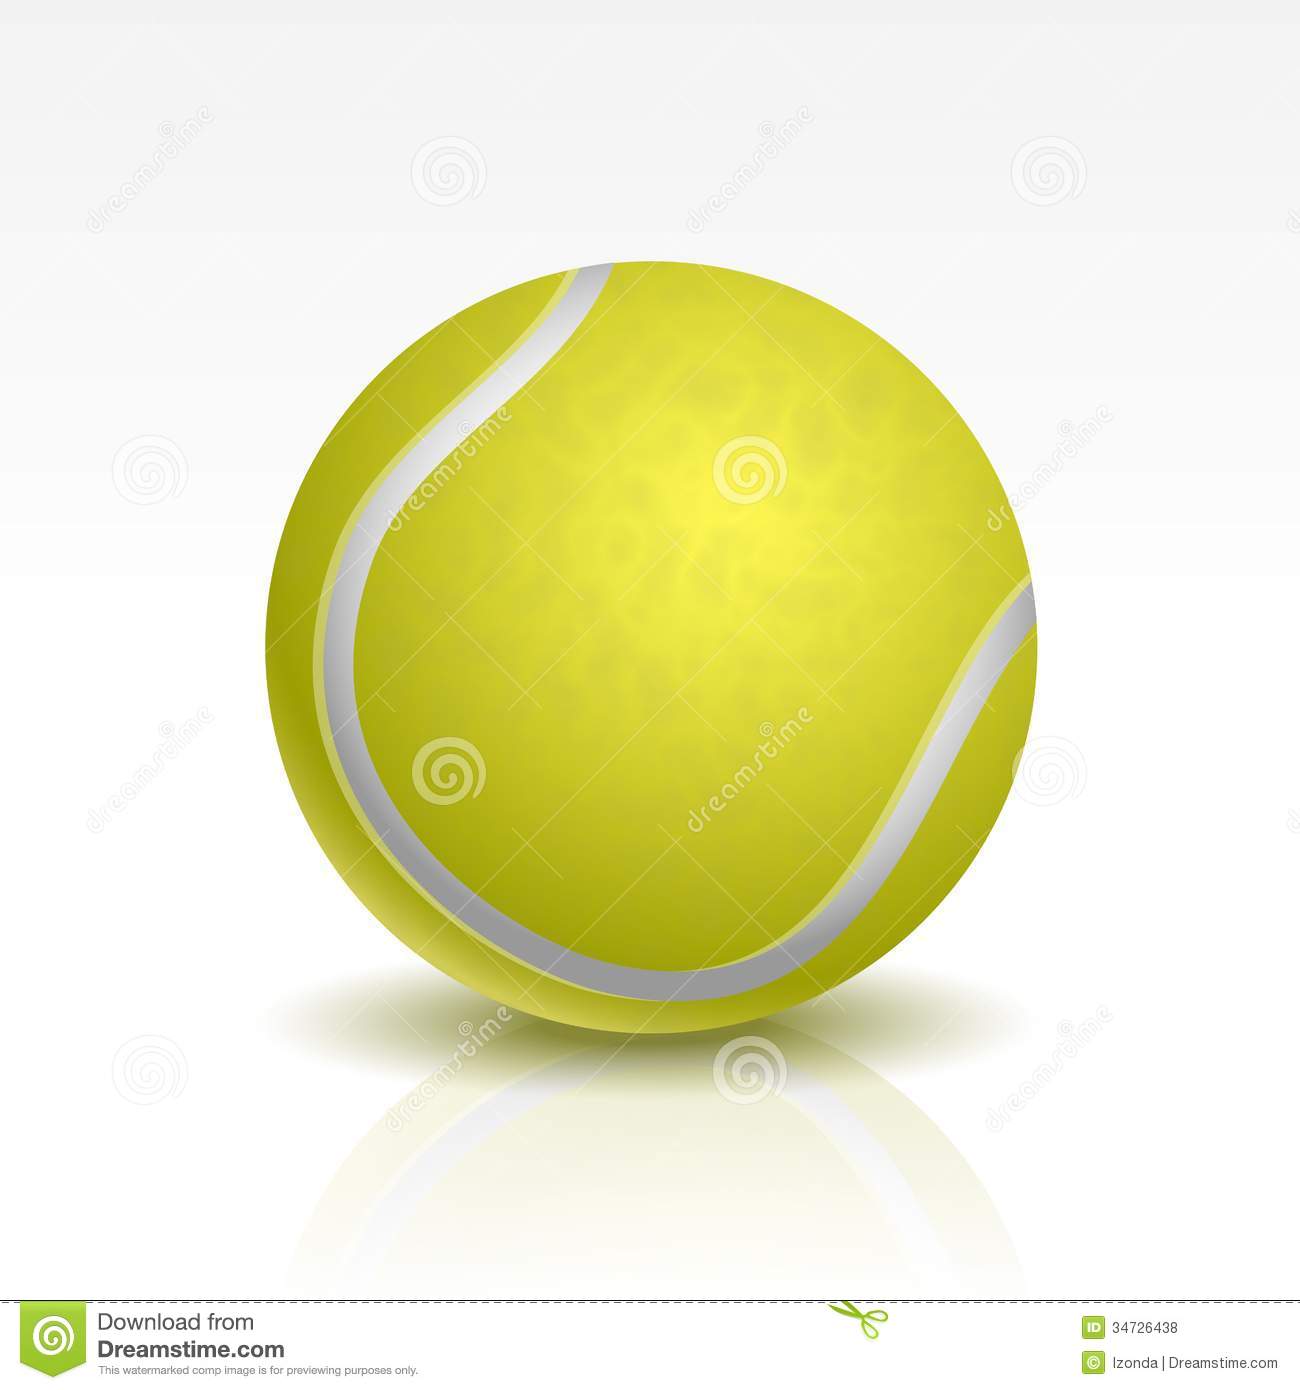 Free Vector Tennis Ball